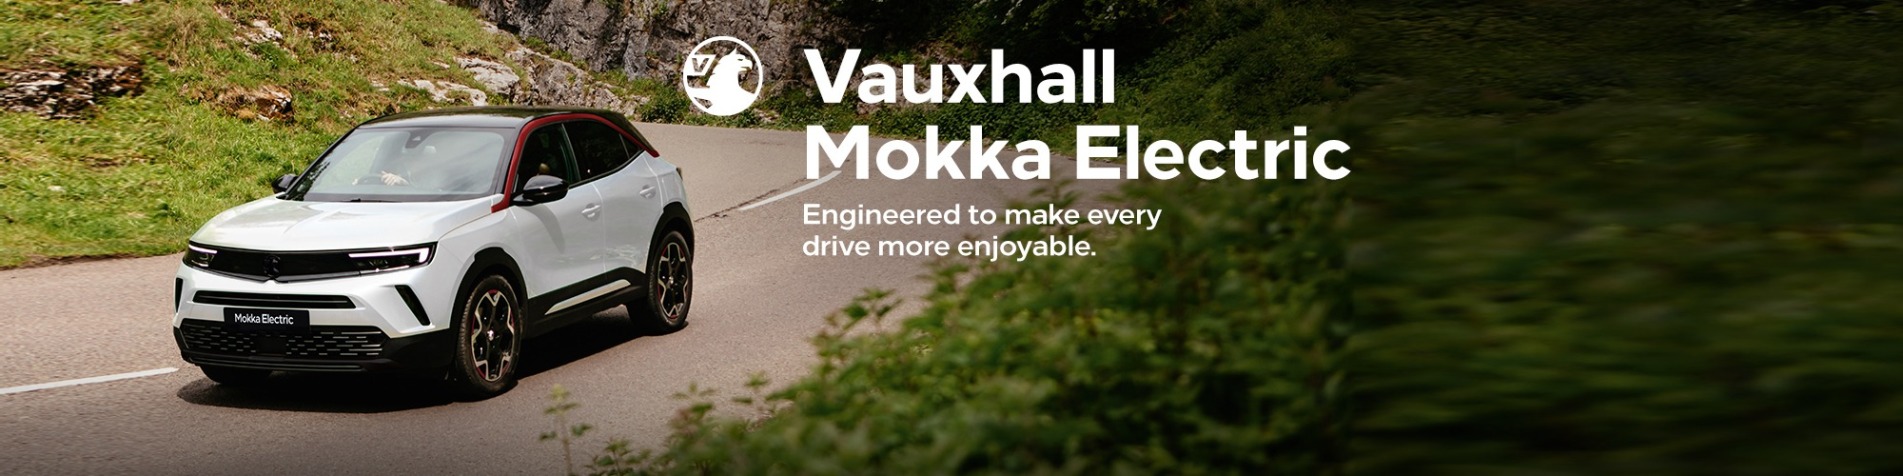 Mokka Electric generic website jpegs